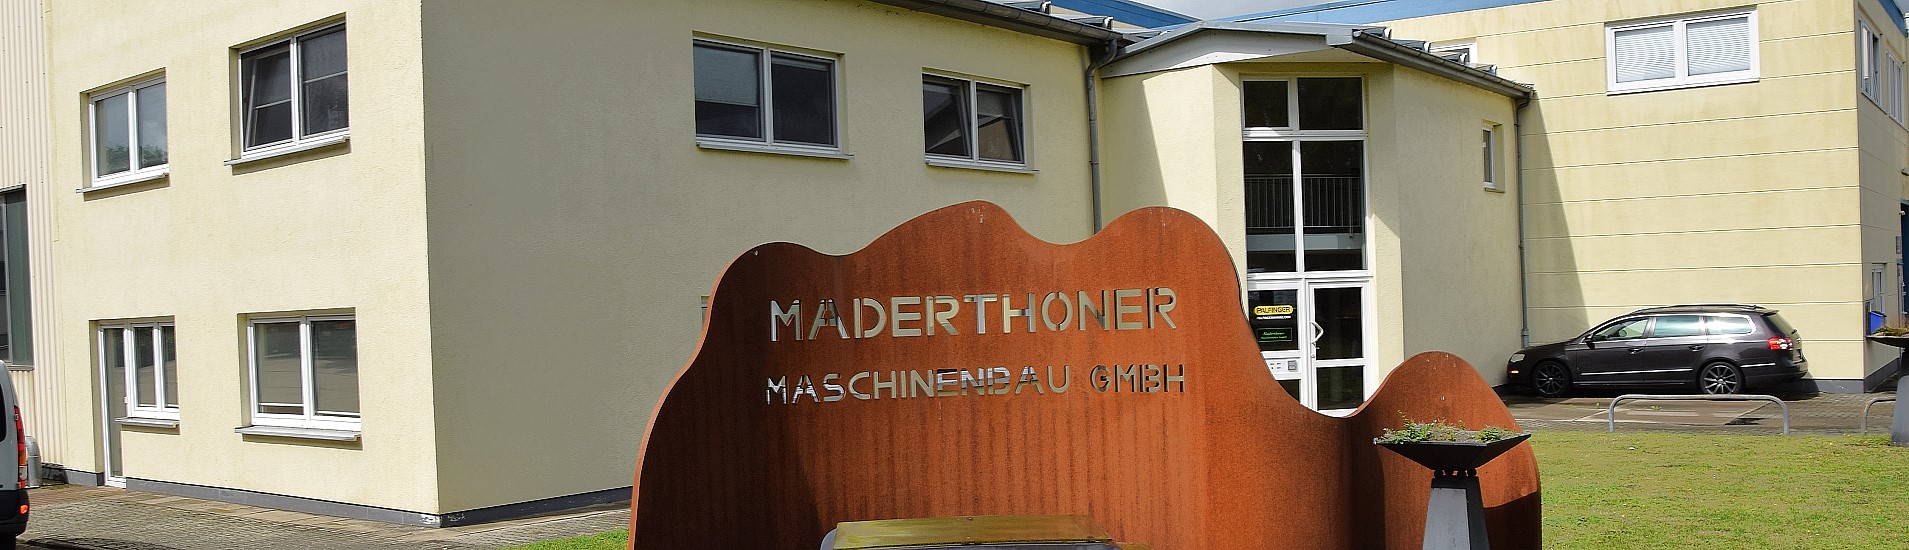 Maderthoner Maschinenbau - COMPANY